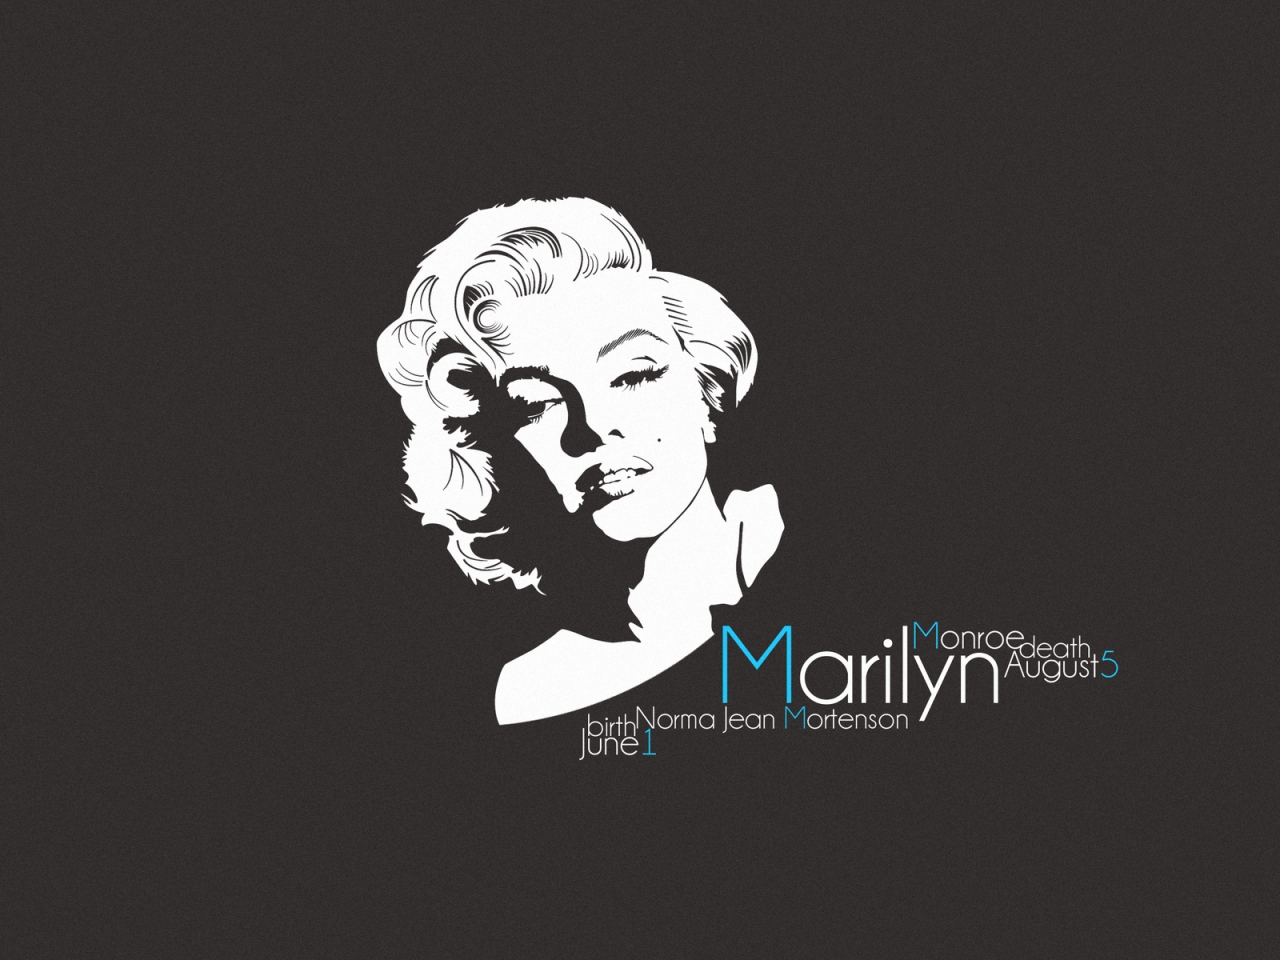 Marilyn Monroe for 1280 x 960 resolution